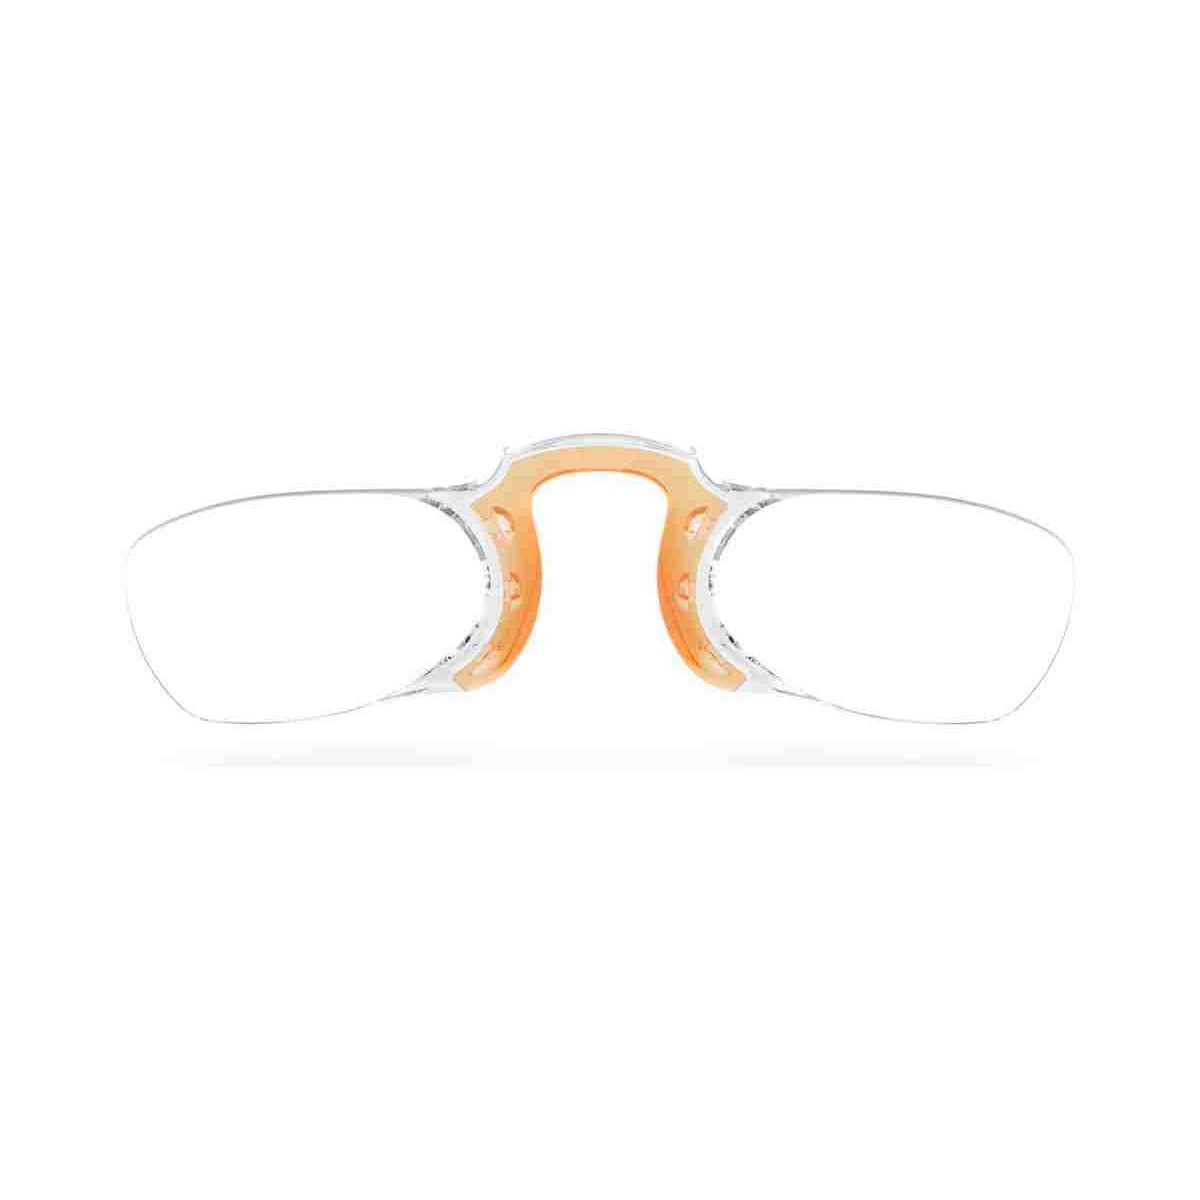 Nooz - Reading glasses - Rectangular - Apricot